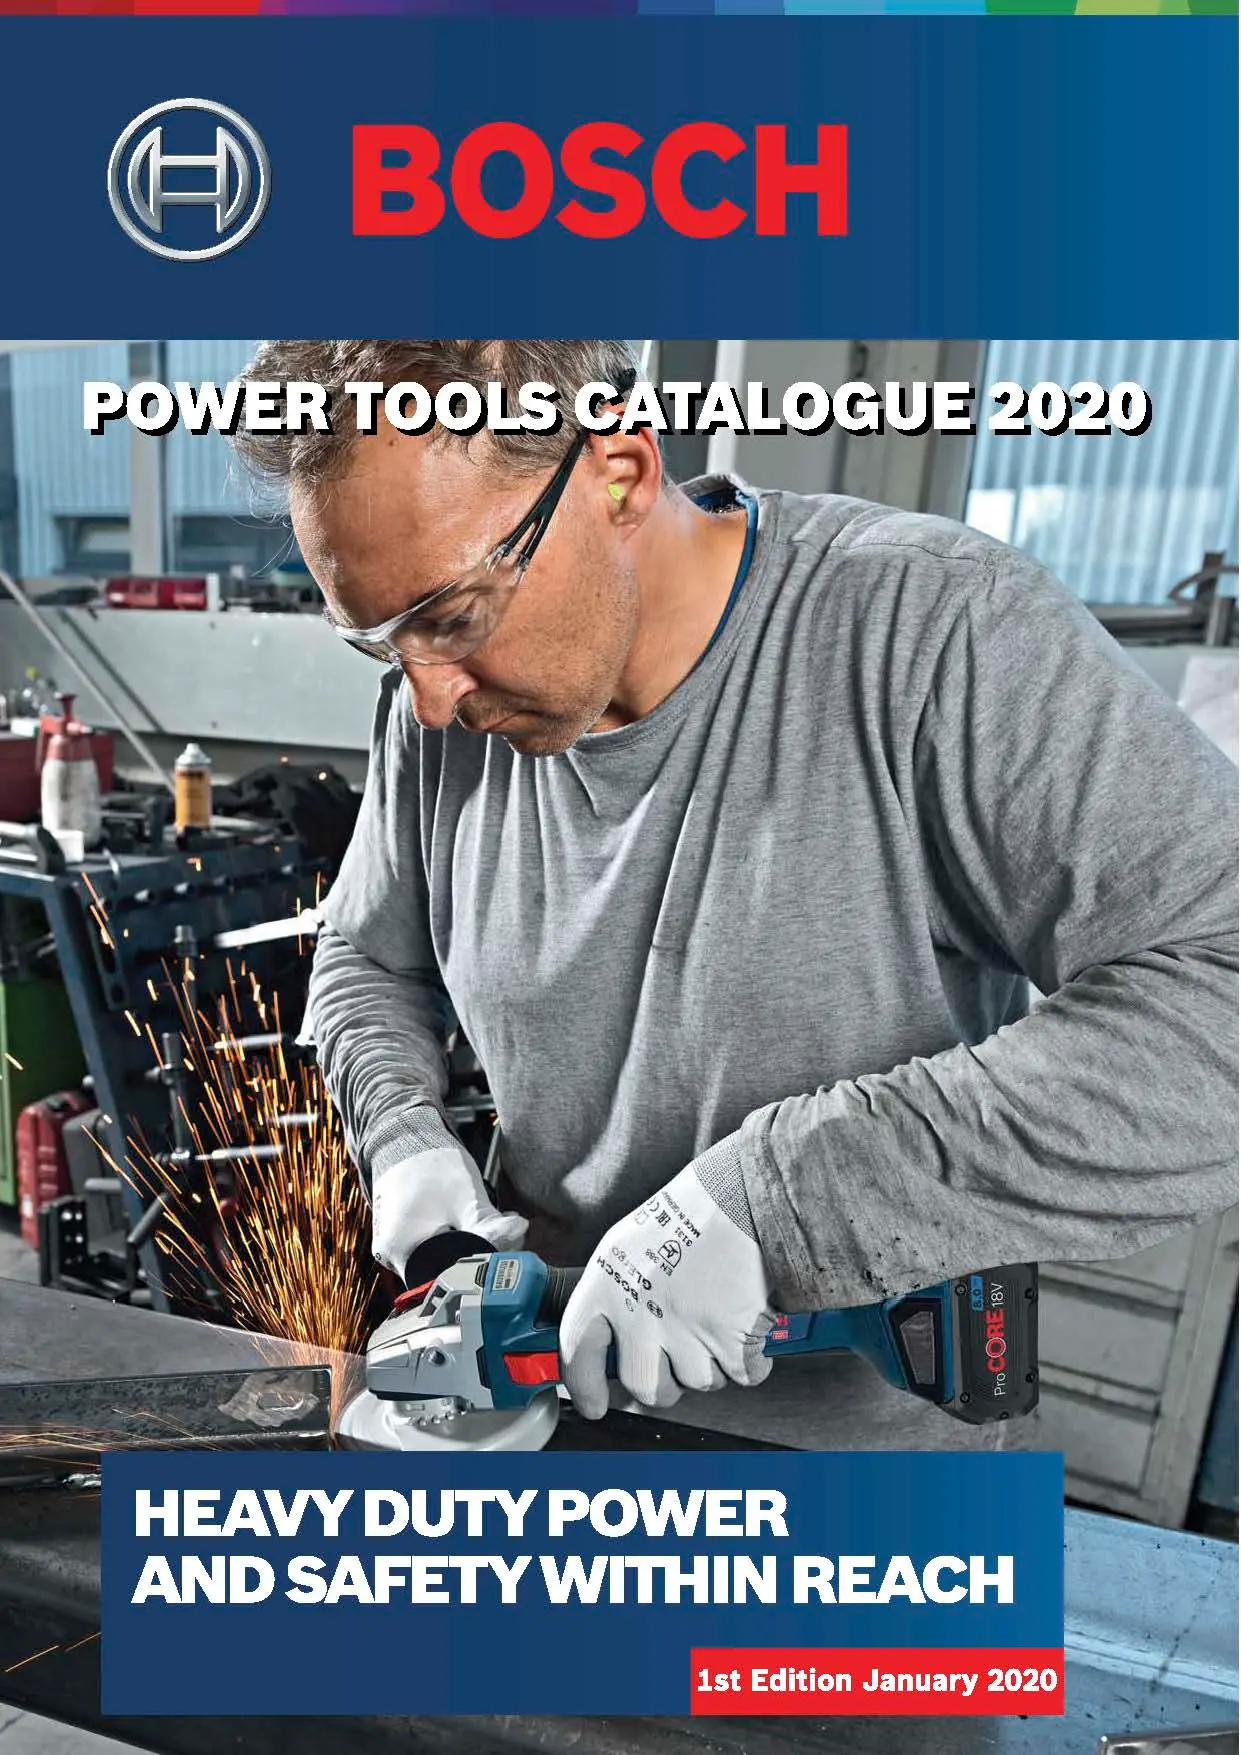 Download: Power Tools Catalogue 2020